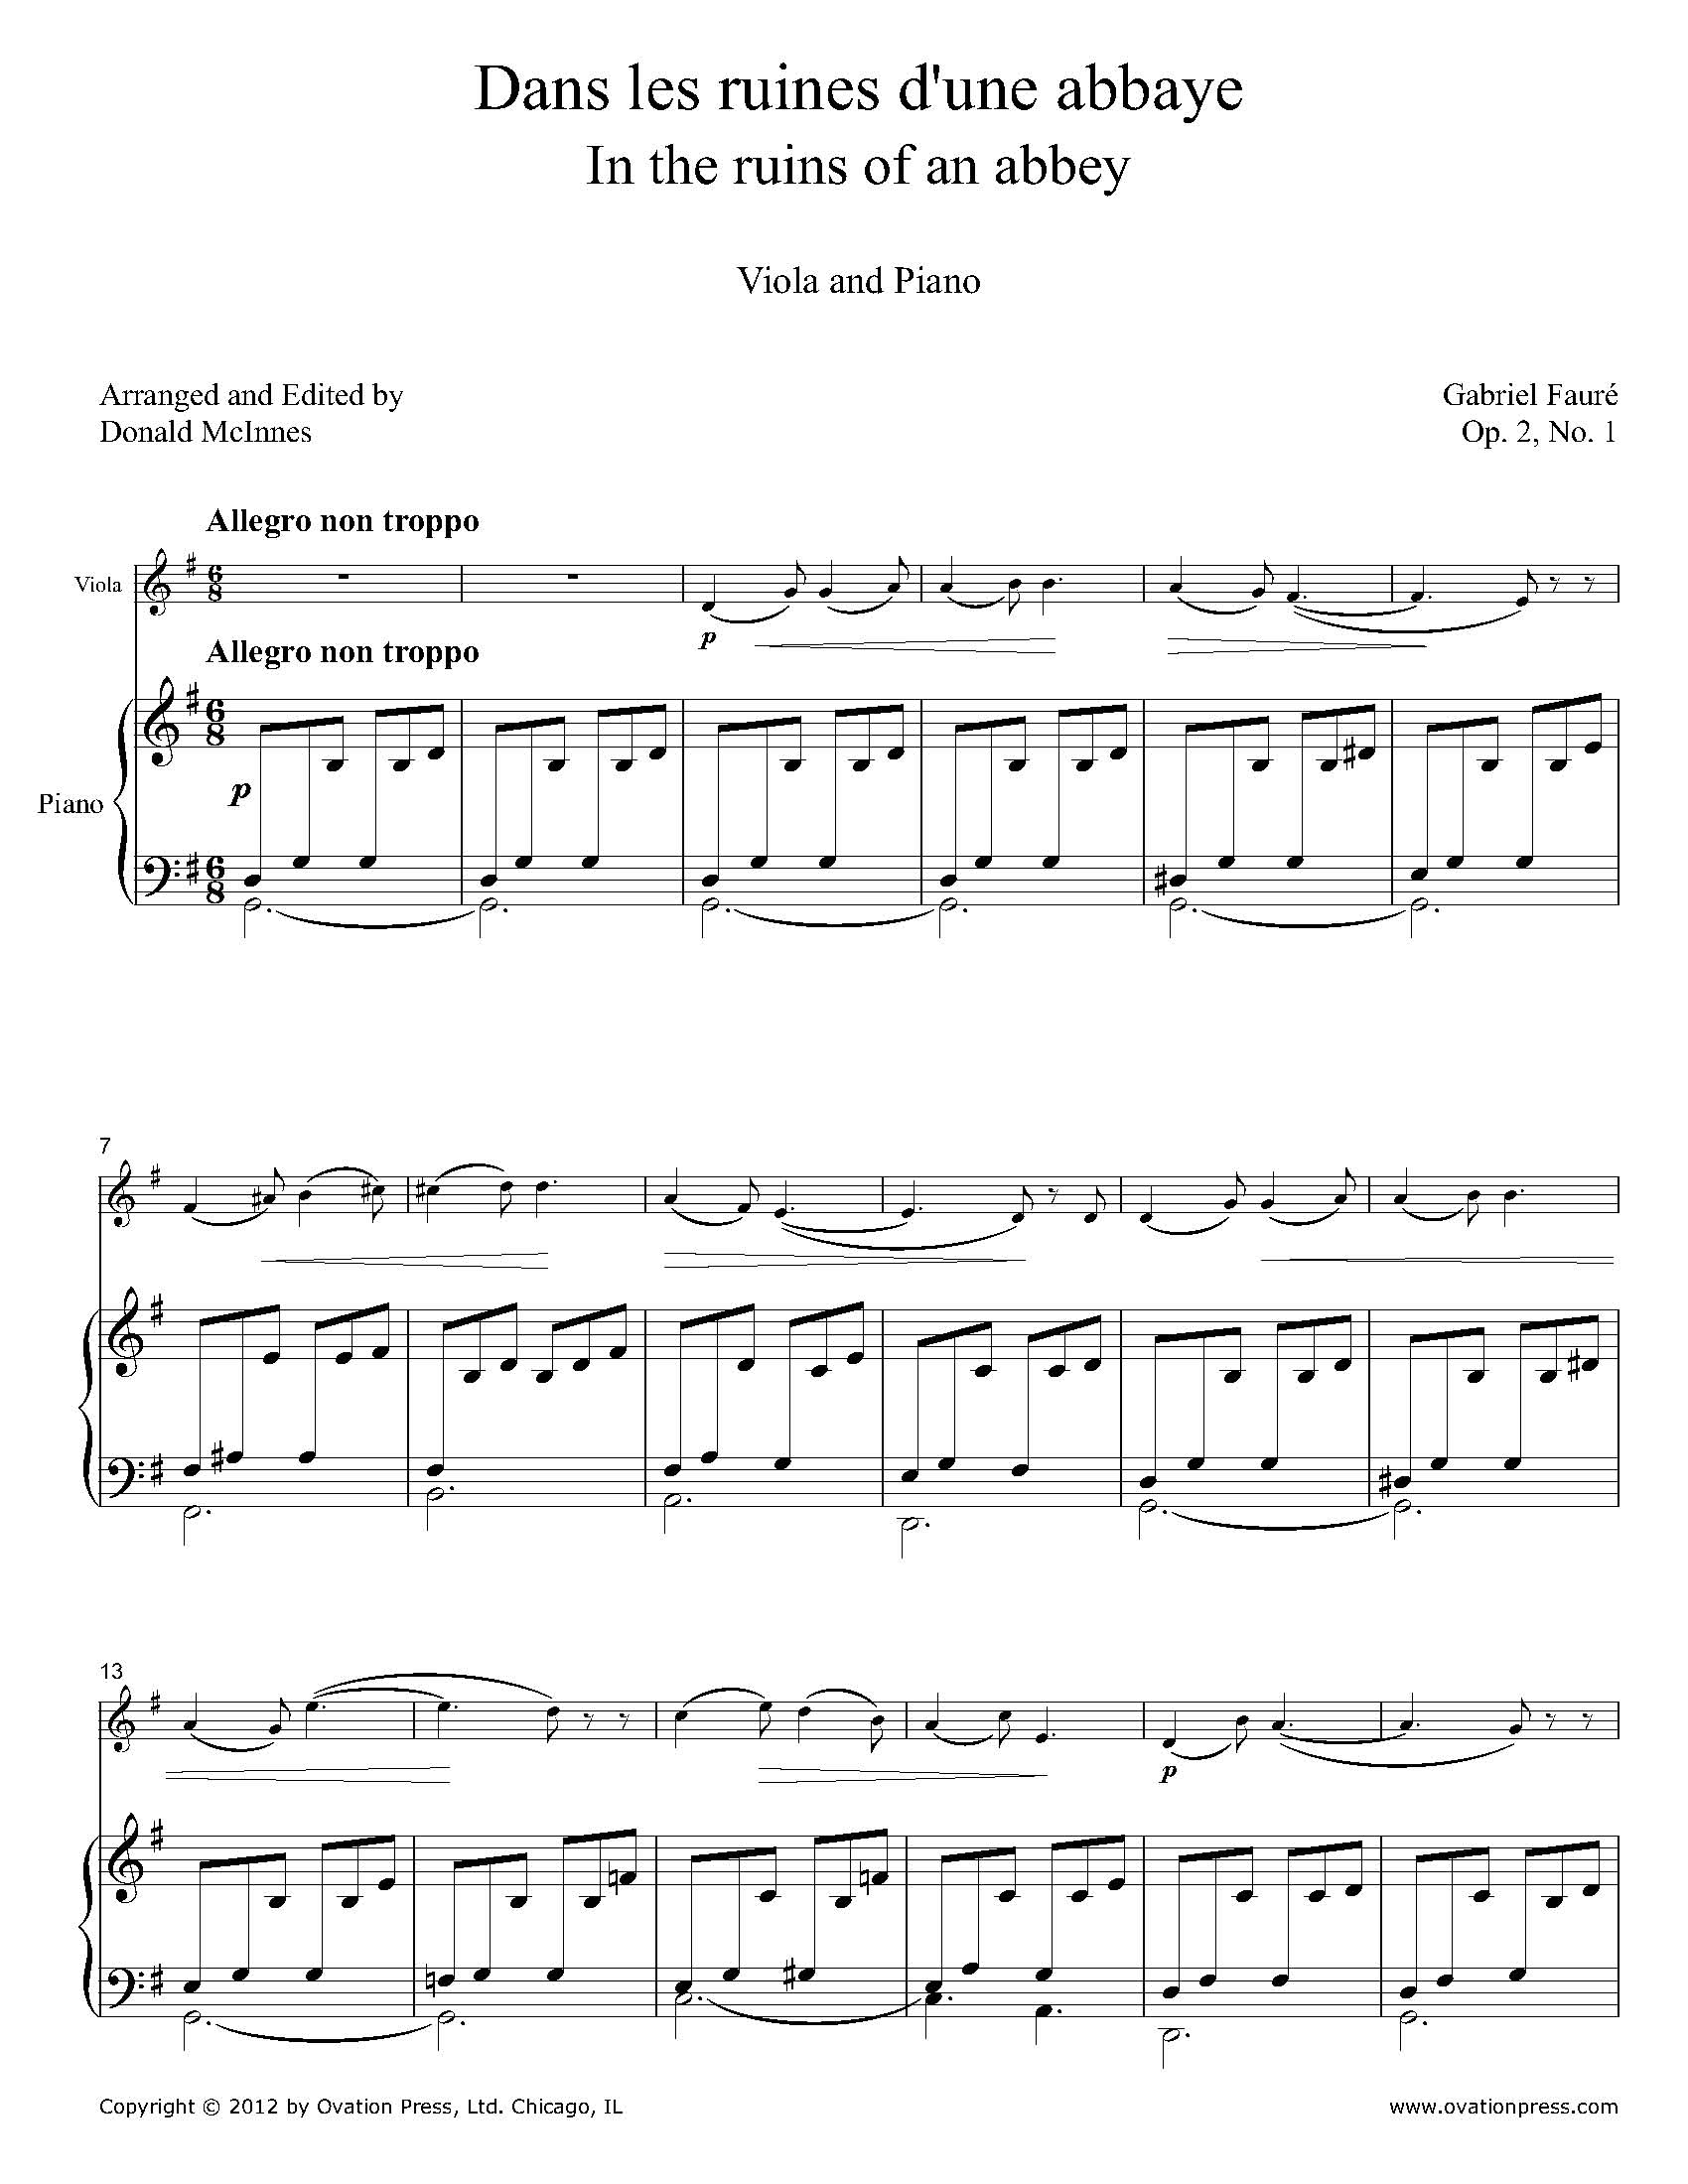 Fauré Dans les ruines d'une abbaye for Viola and Piano